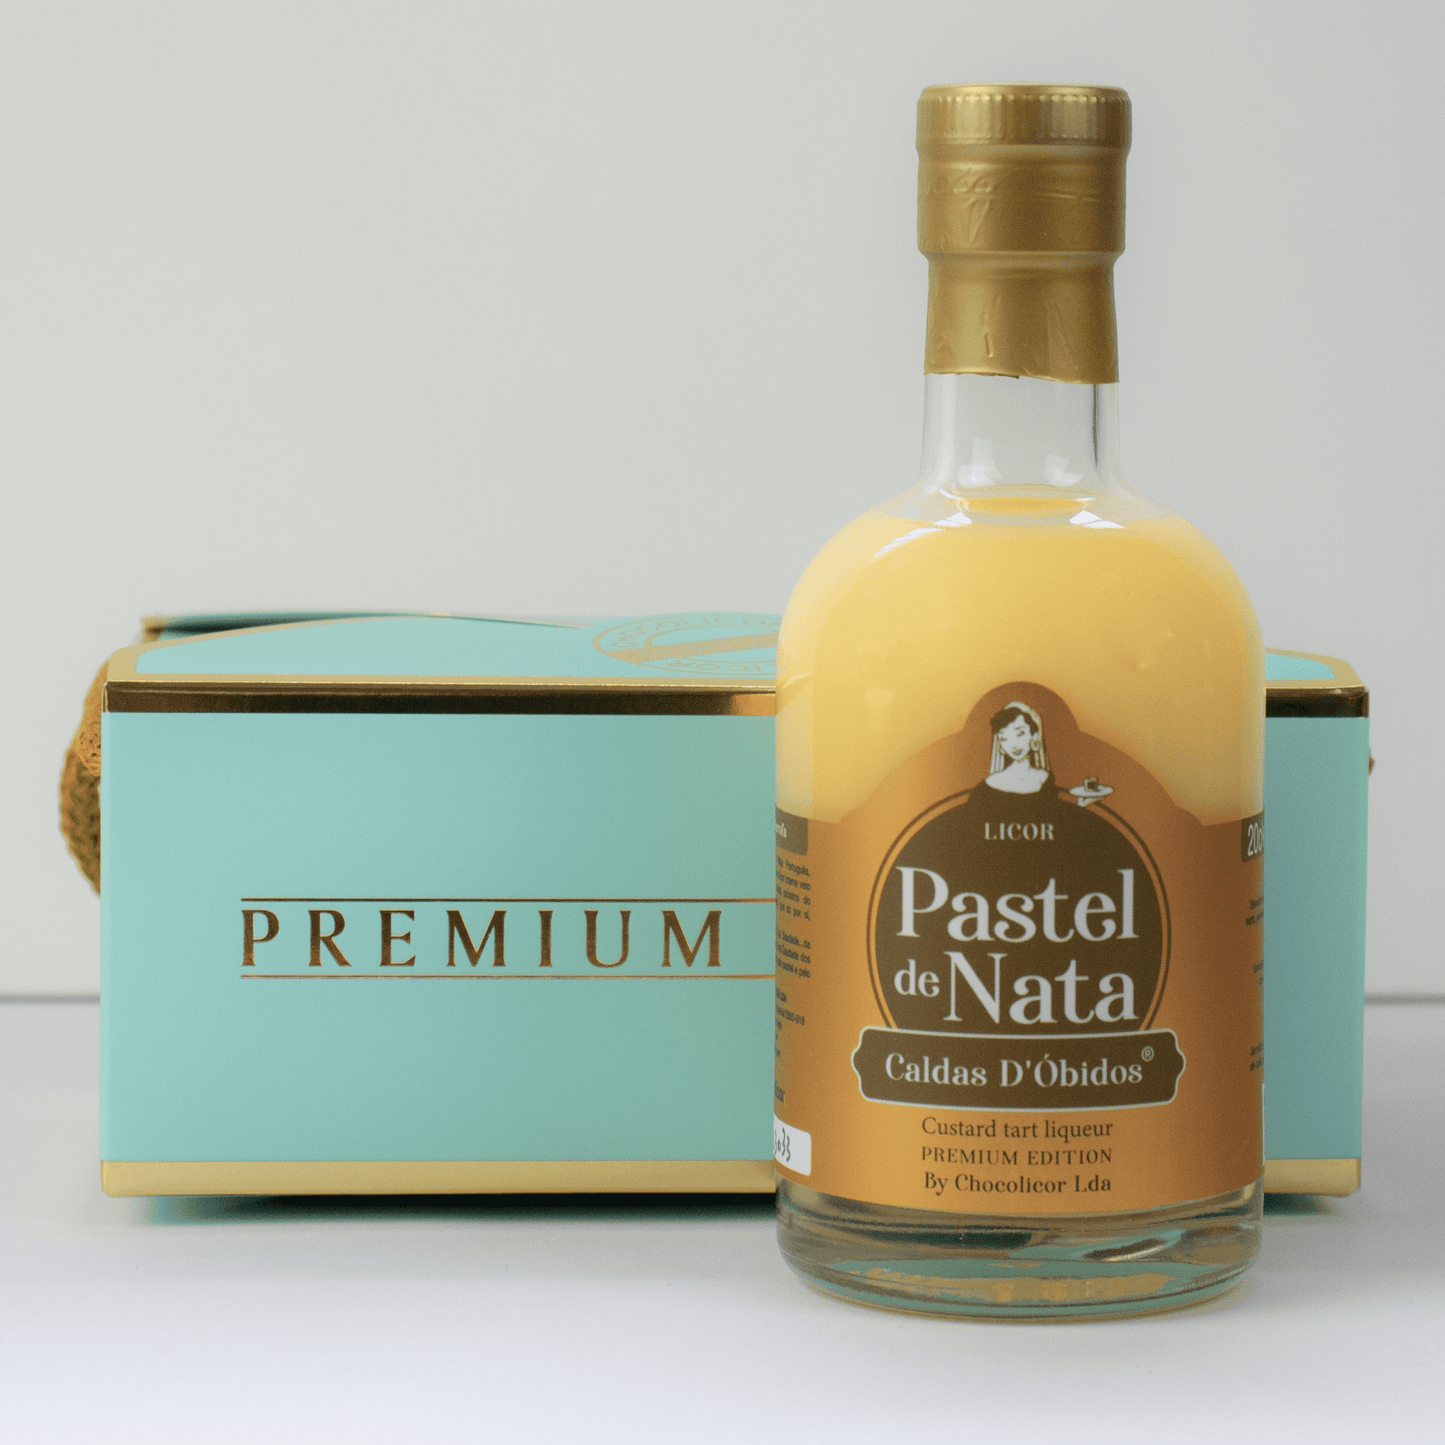 Premium Pastel de Nata Liqueur - Caldas D'Óbidos